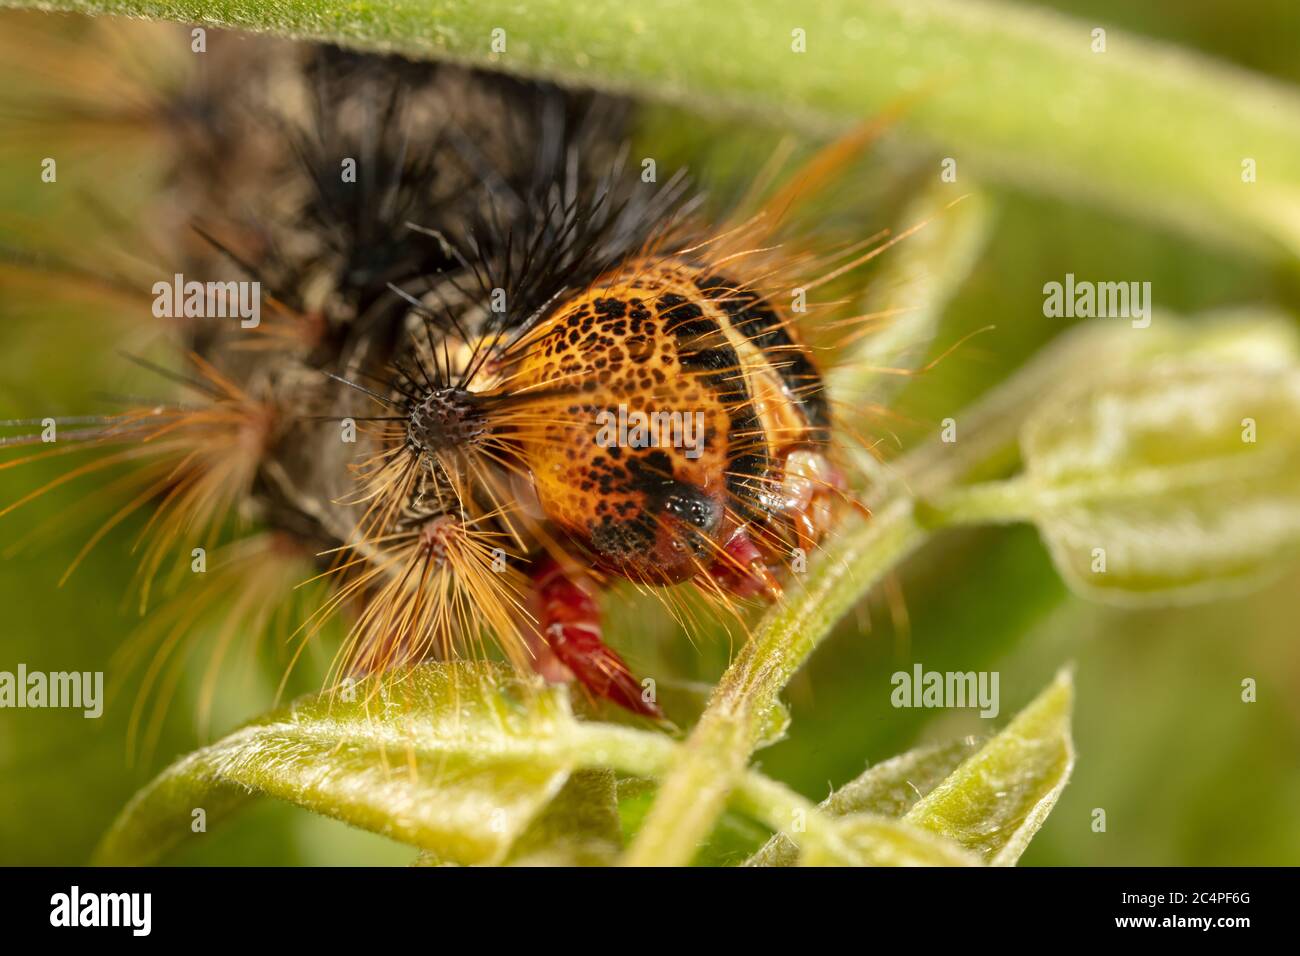 Orange And Black Caterpillar Of The Gypsy Moth Lymantria Dispar With Big Spines On A Green Leaf Stock Photo Alamy